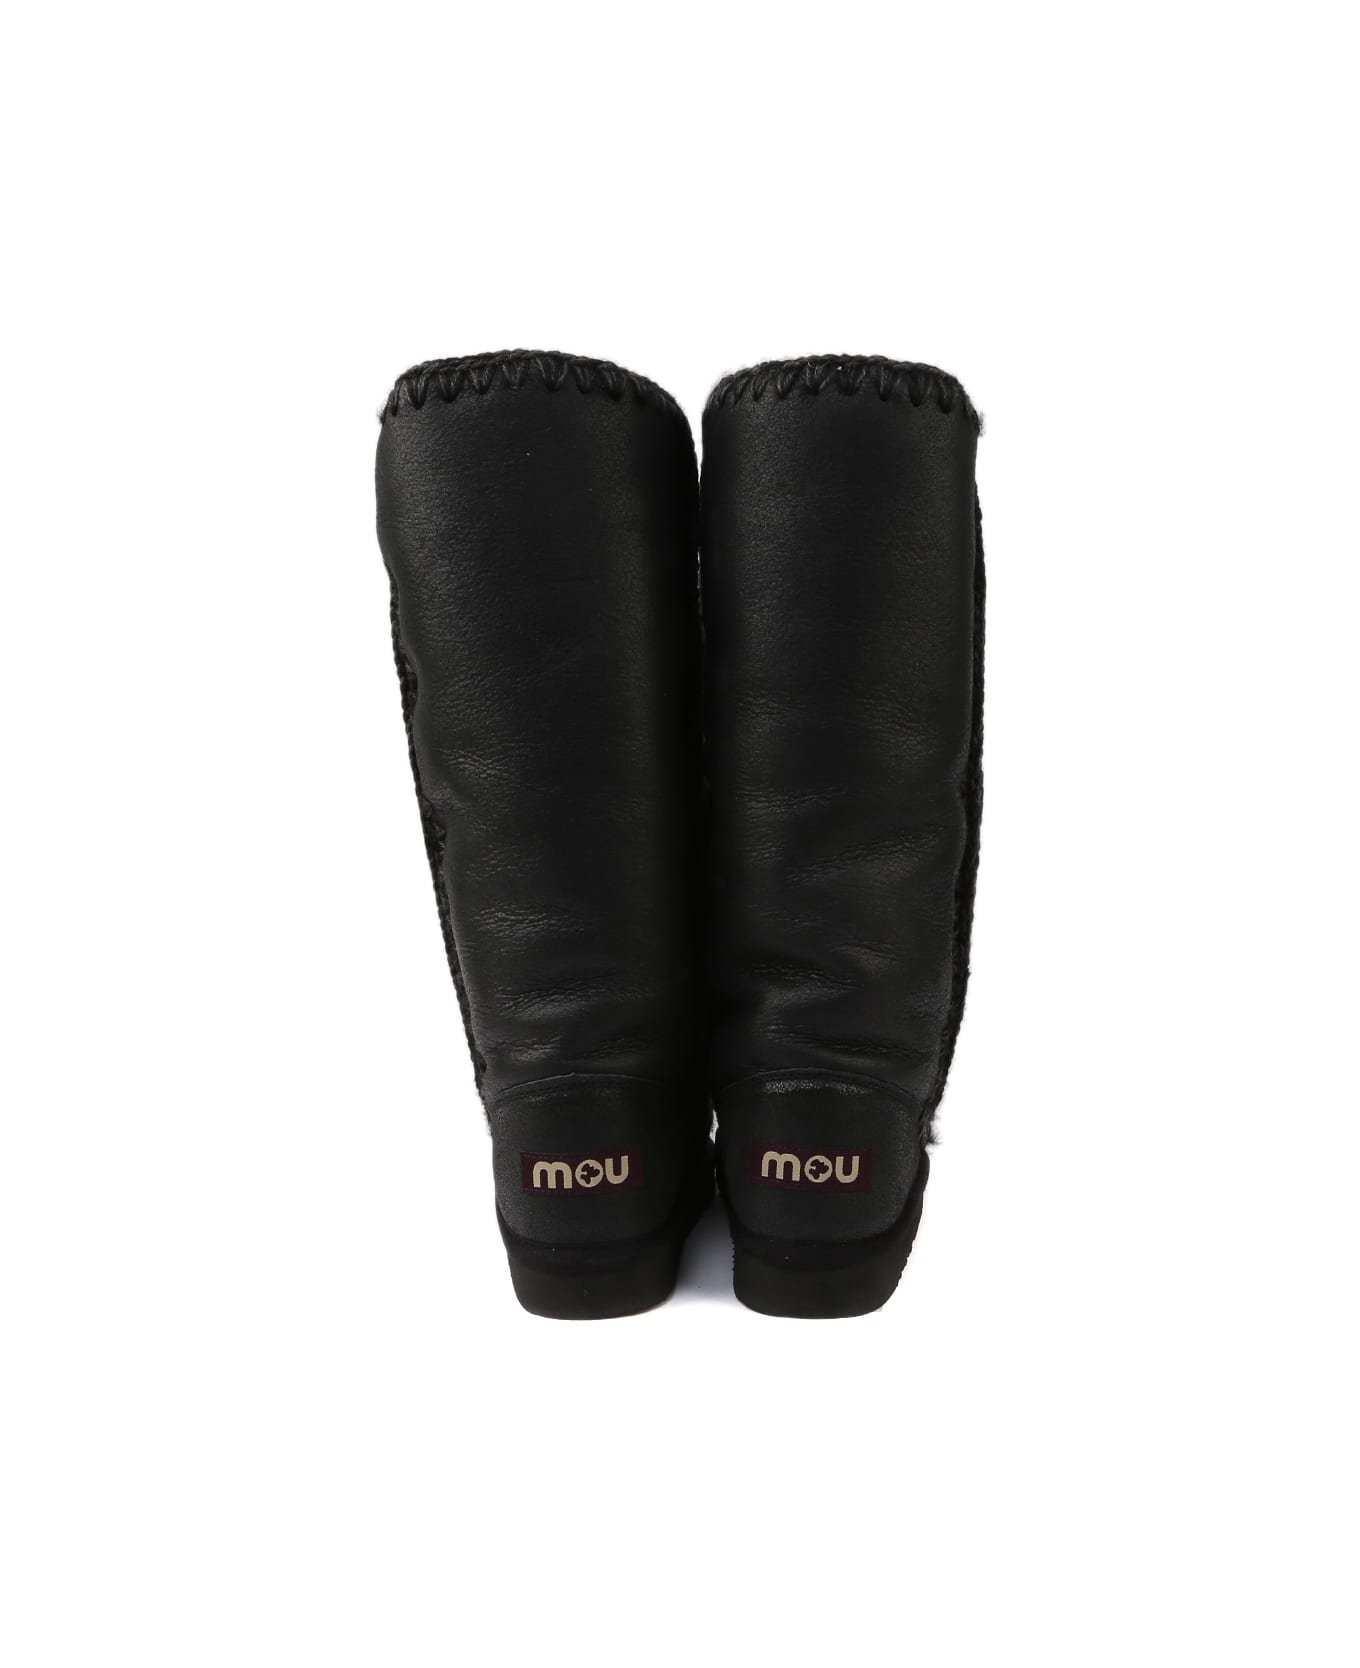 Mou Eskimo 40 Boots With Metallic Finishes - Black ブーツ